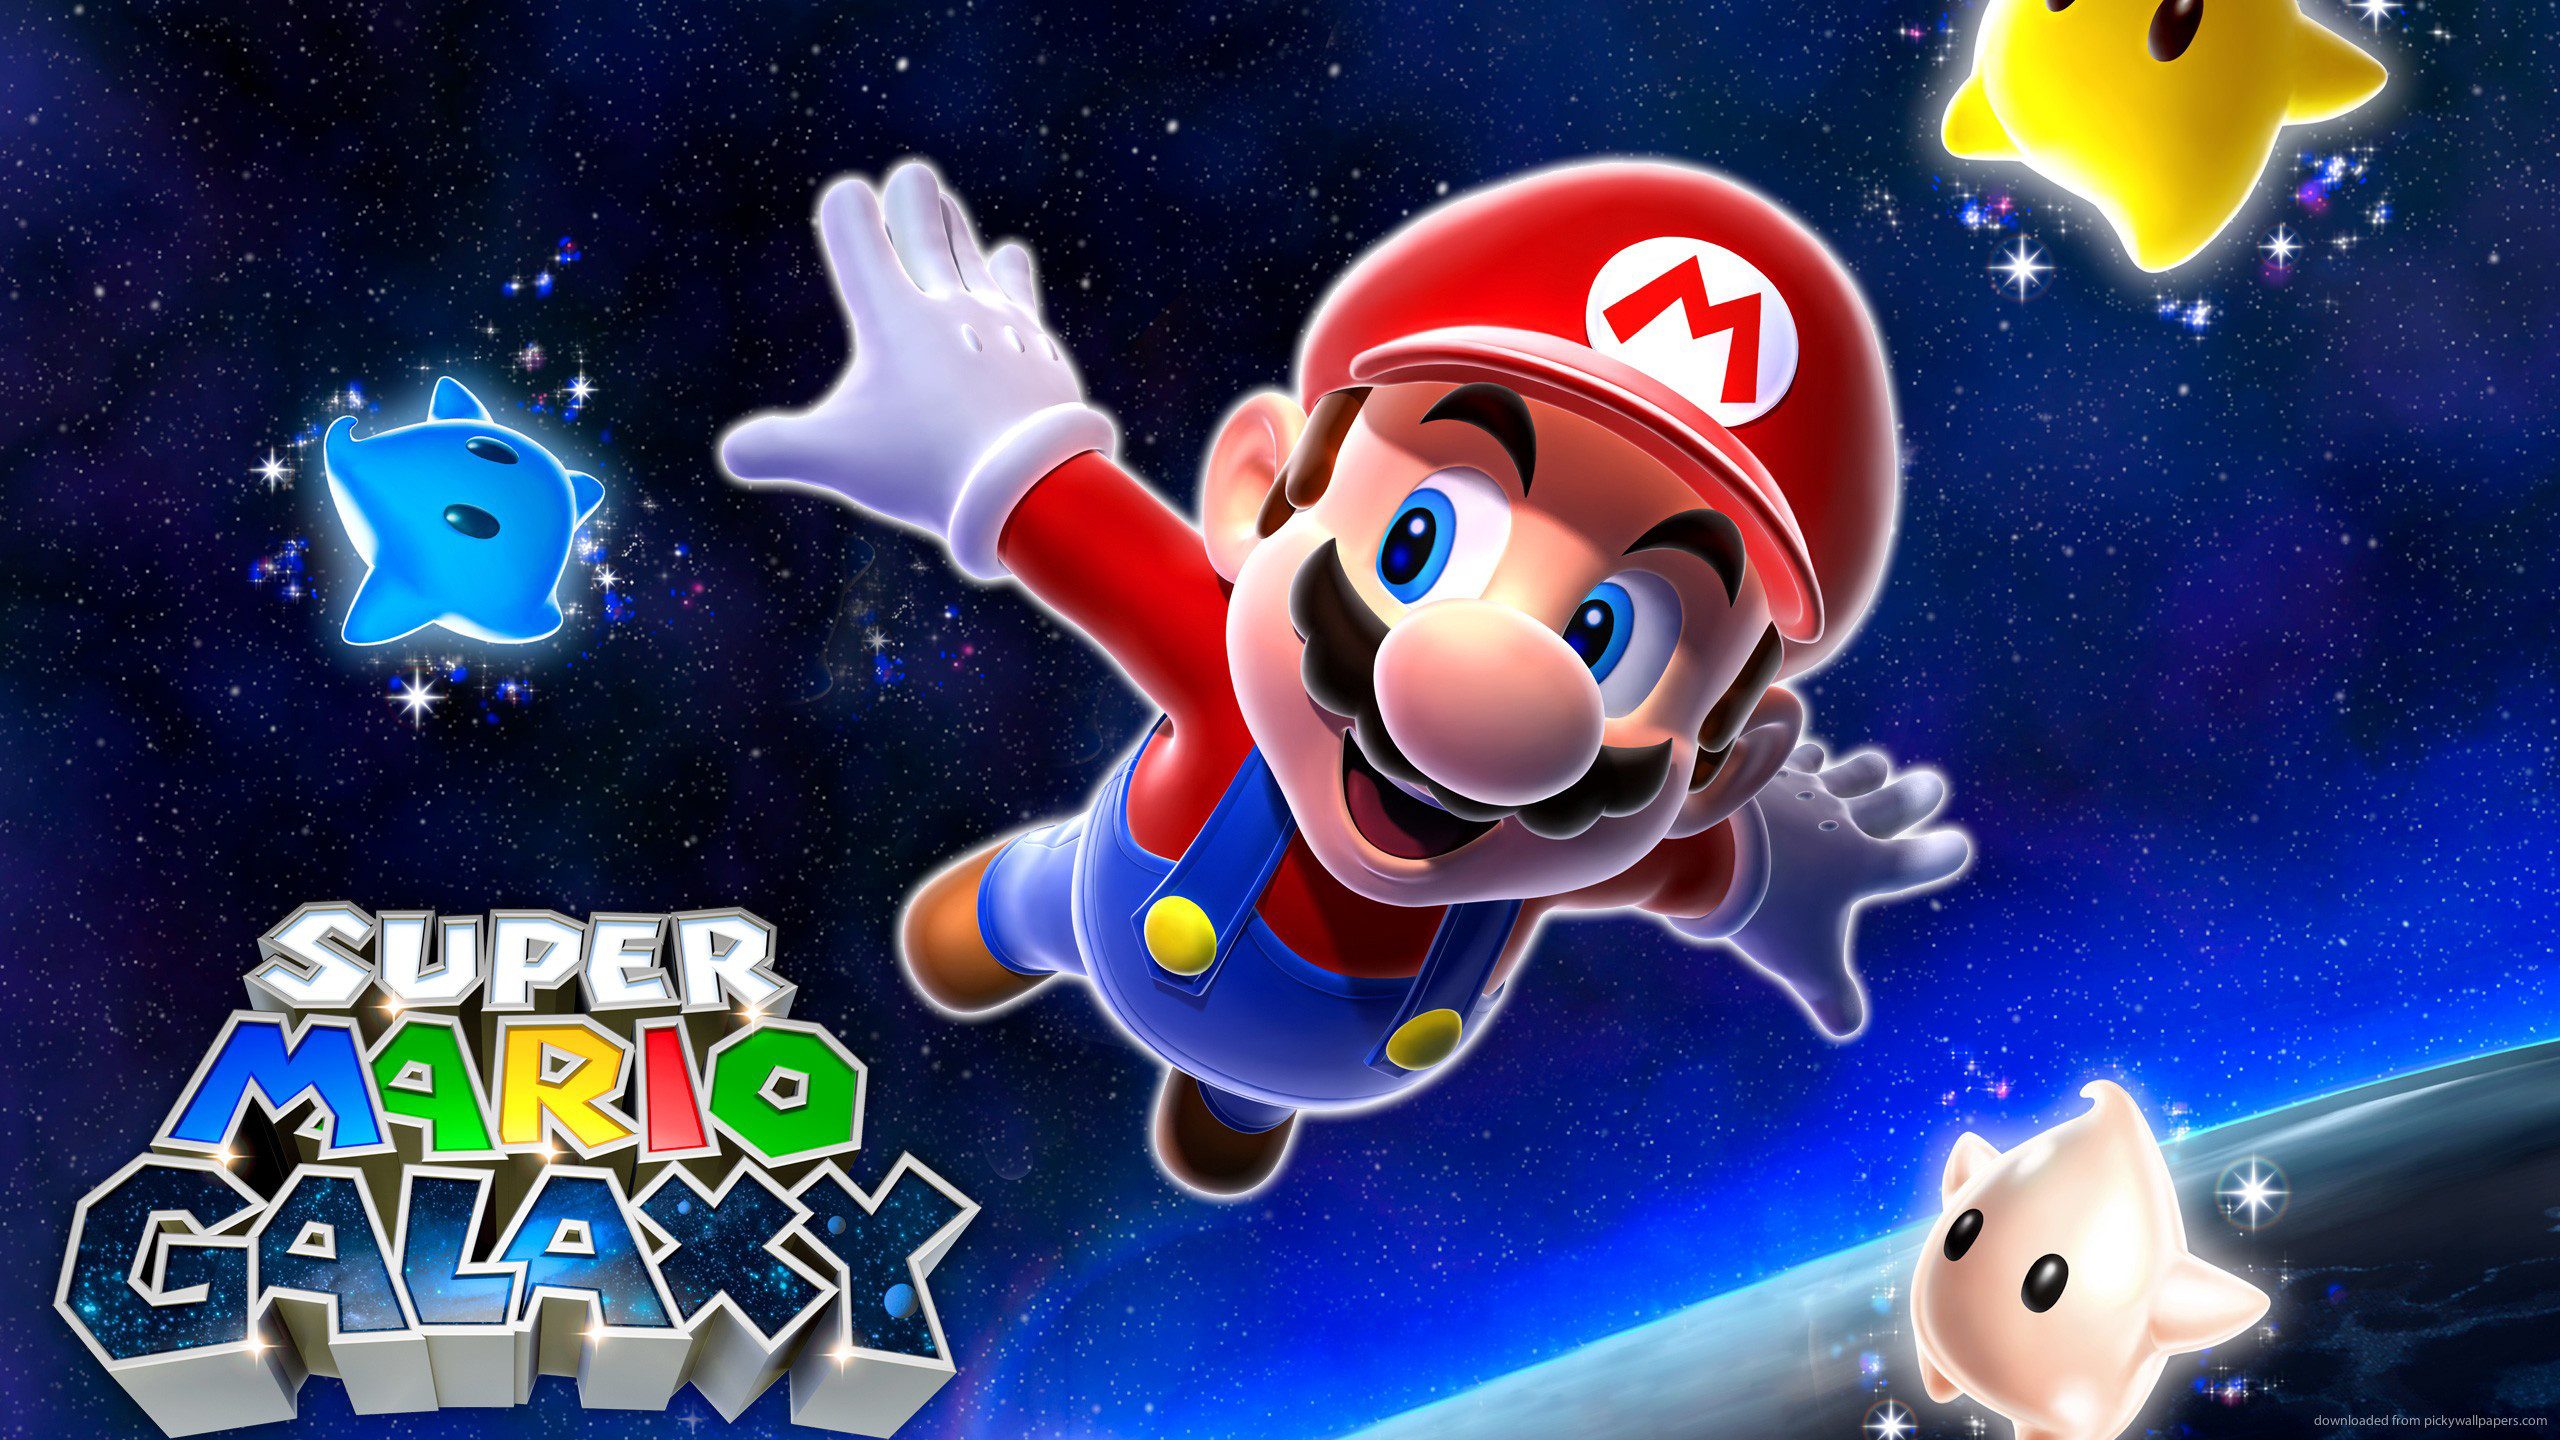 2560x1440 Super Mario Galaxy for 